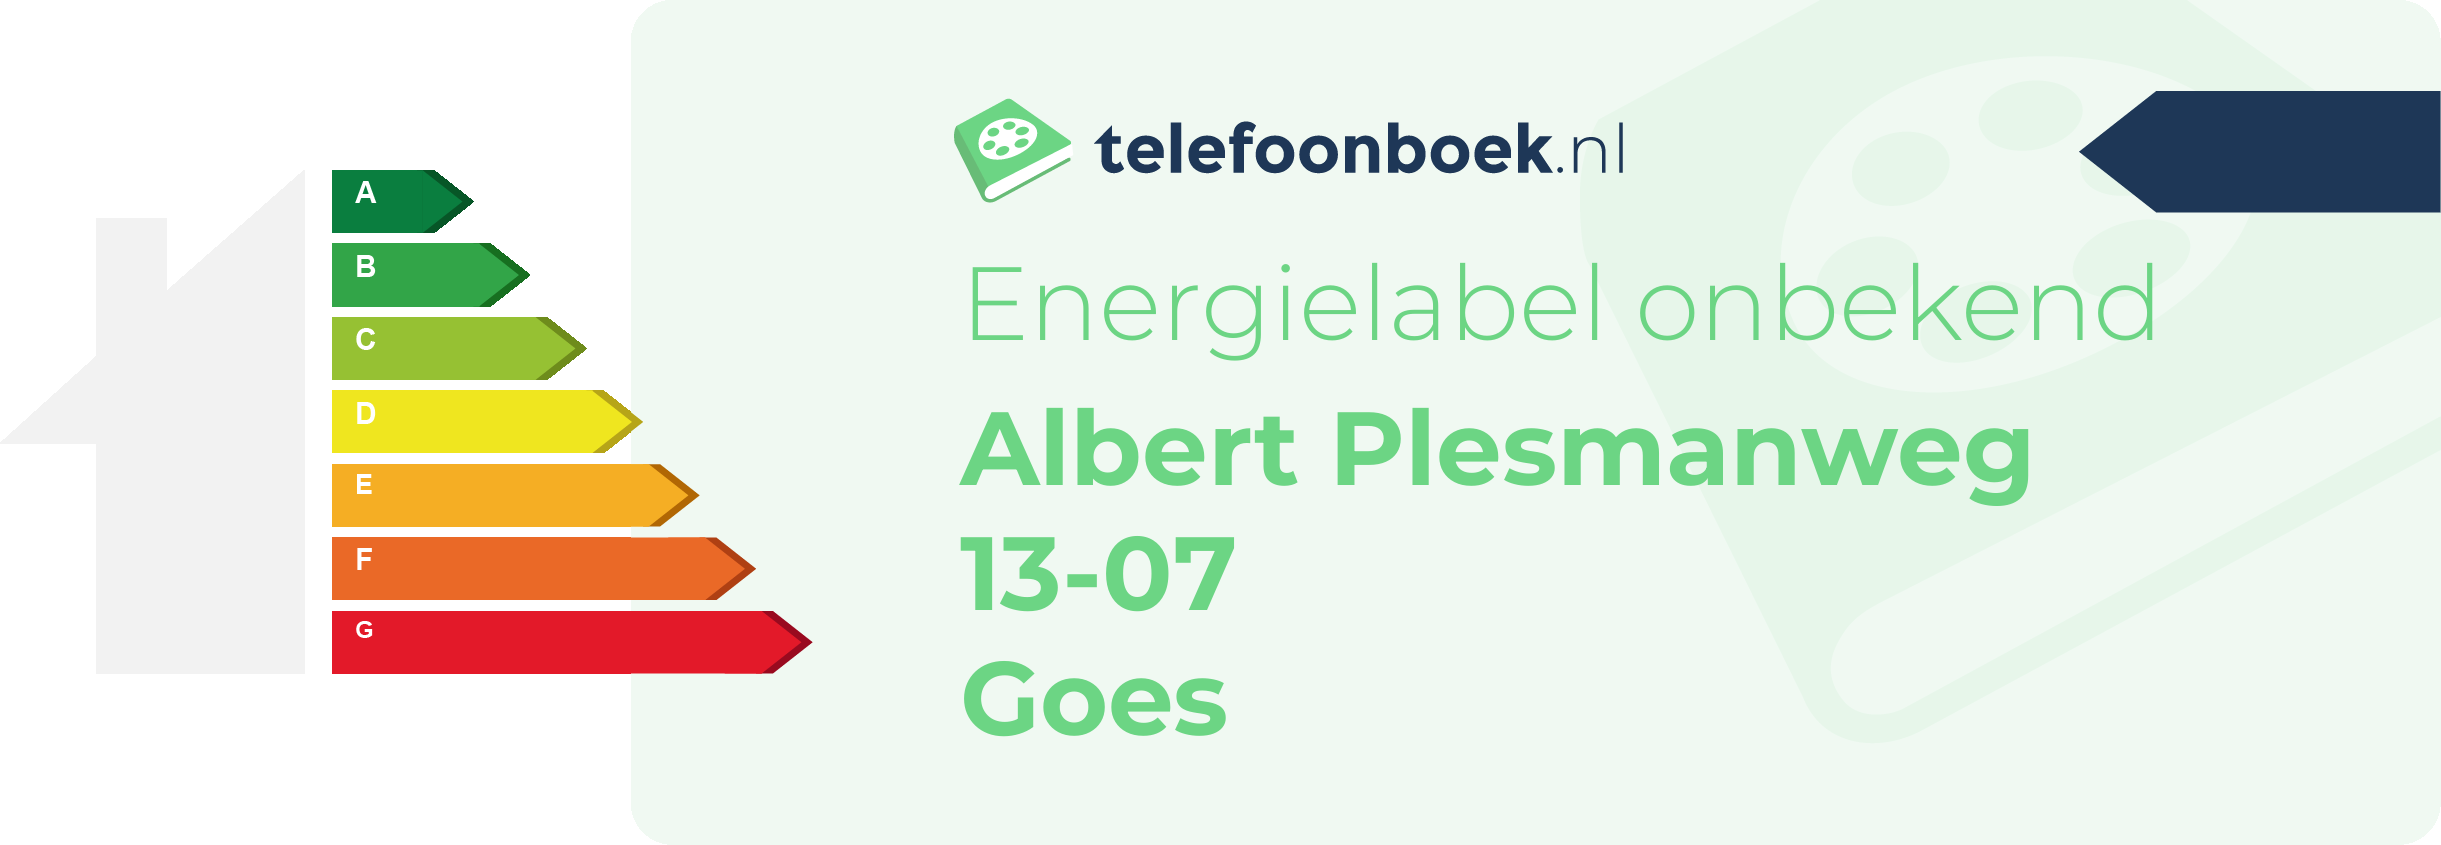 Energielabel Albert Plesmanweg 13-07 Goes